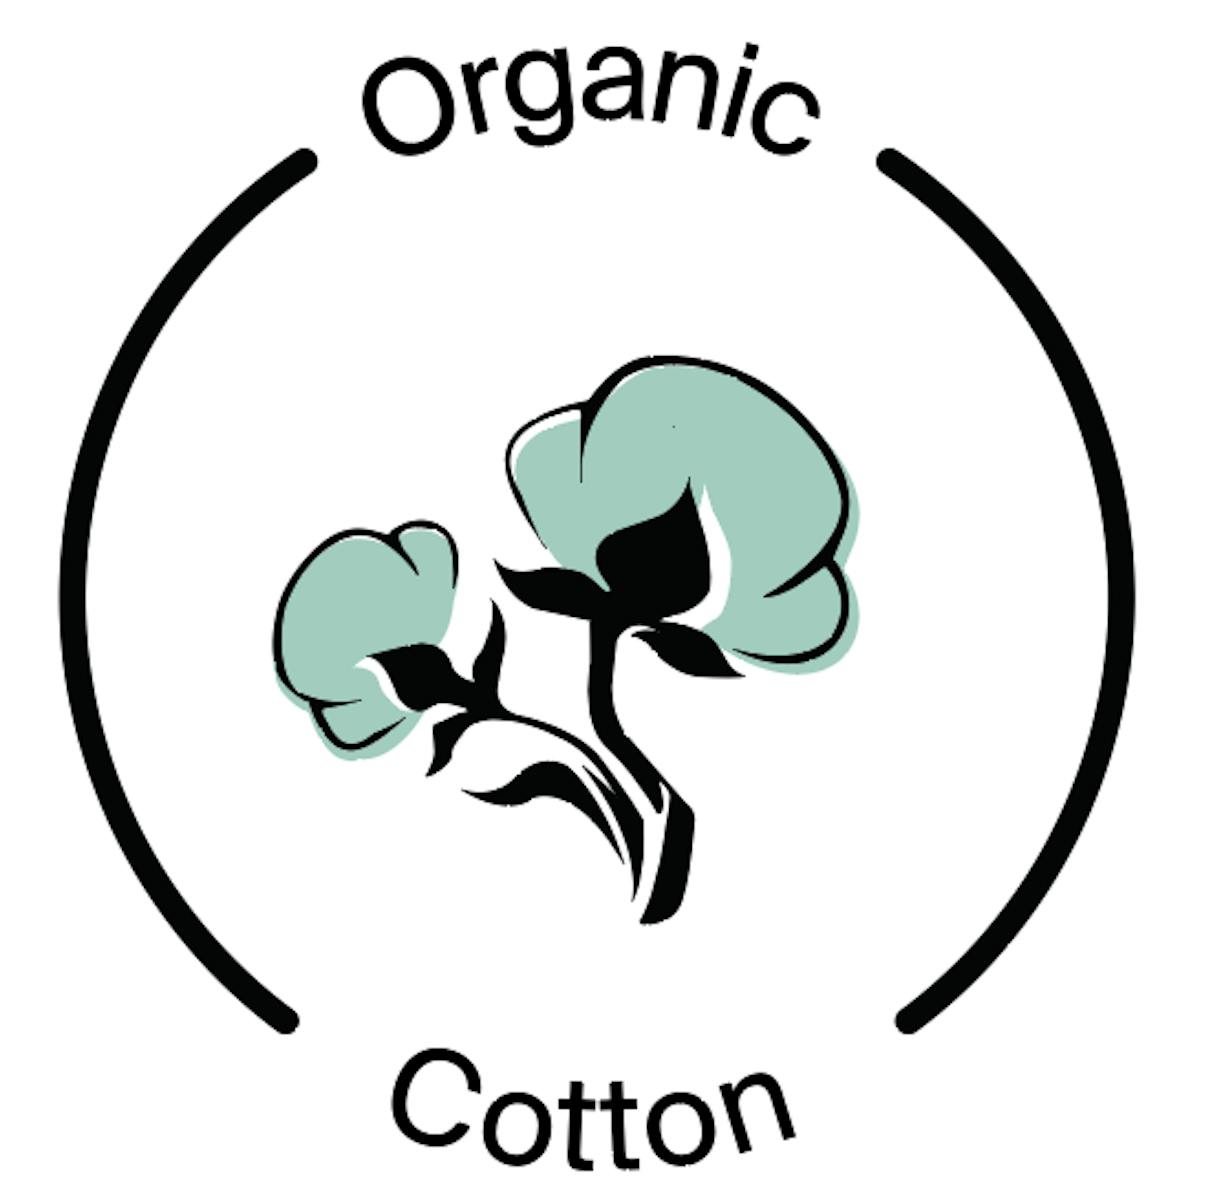 Organic Cotton certification